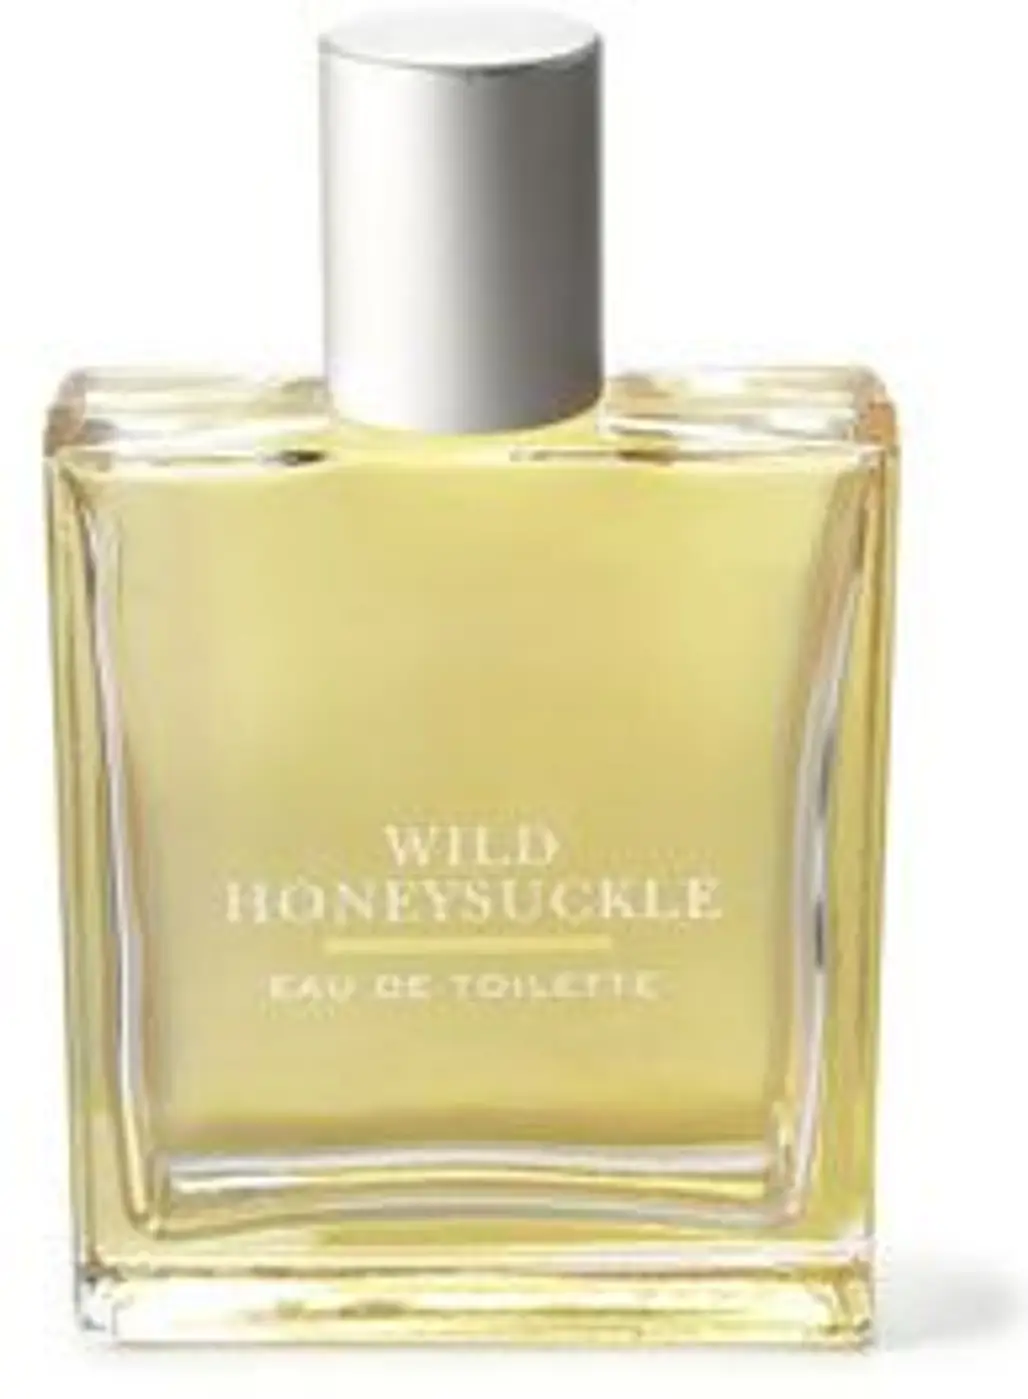 Wild Honeysuckle by Bath & Body Works